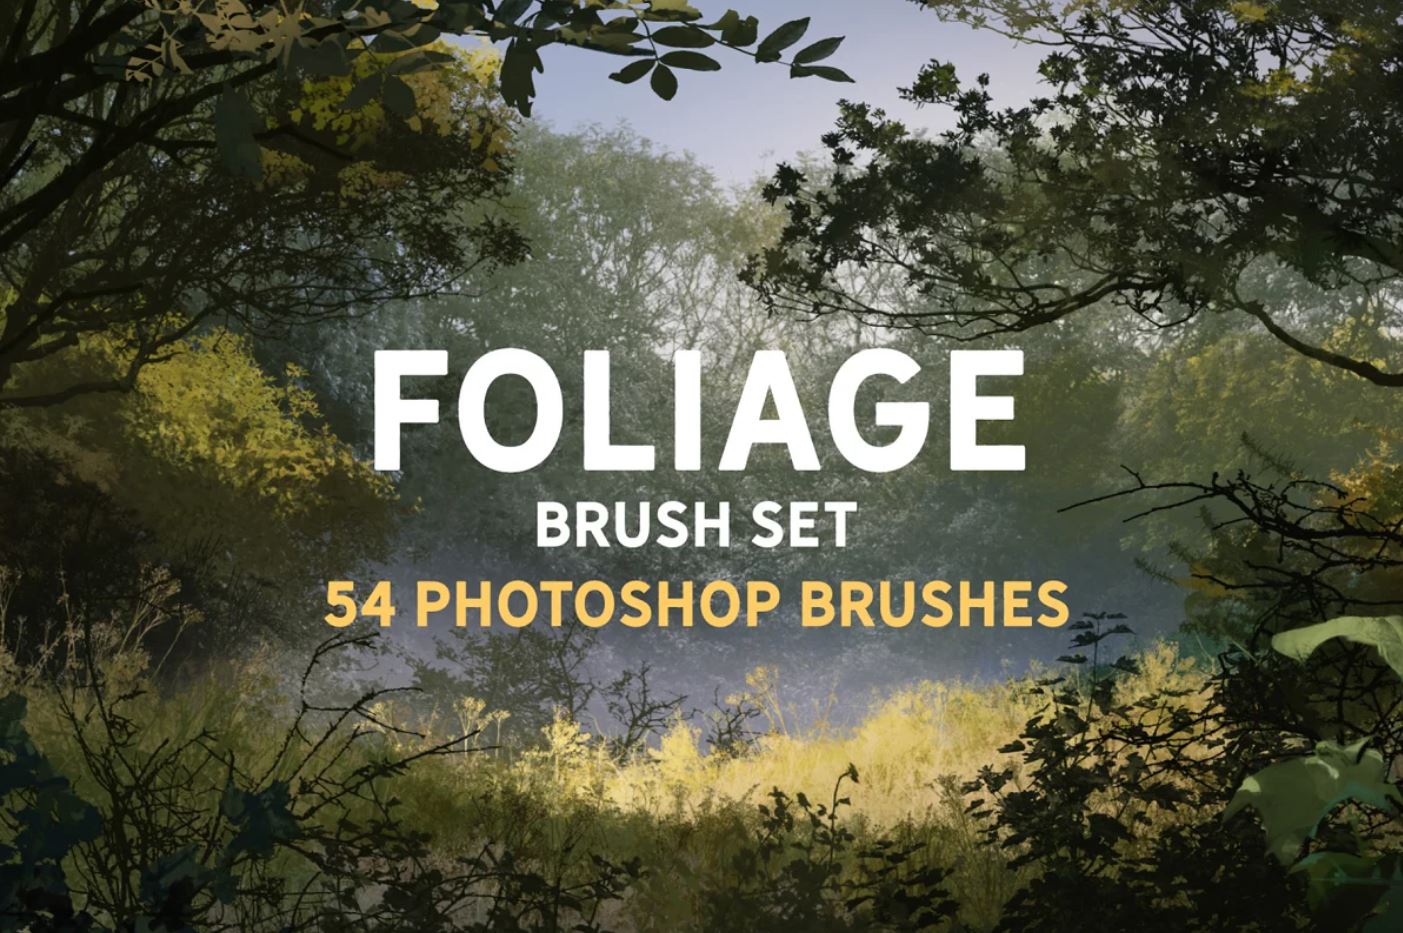 54 unique foliage brushes for Photoshop download